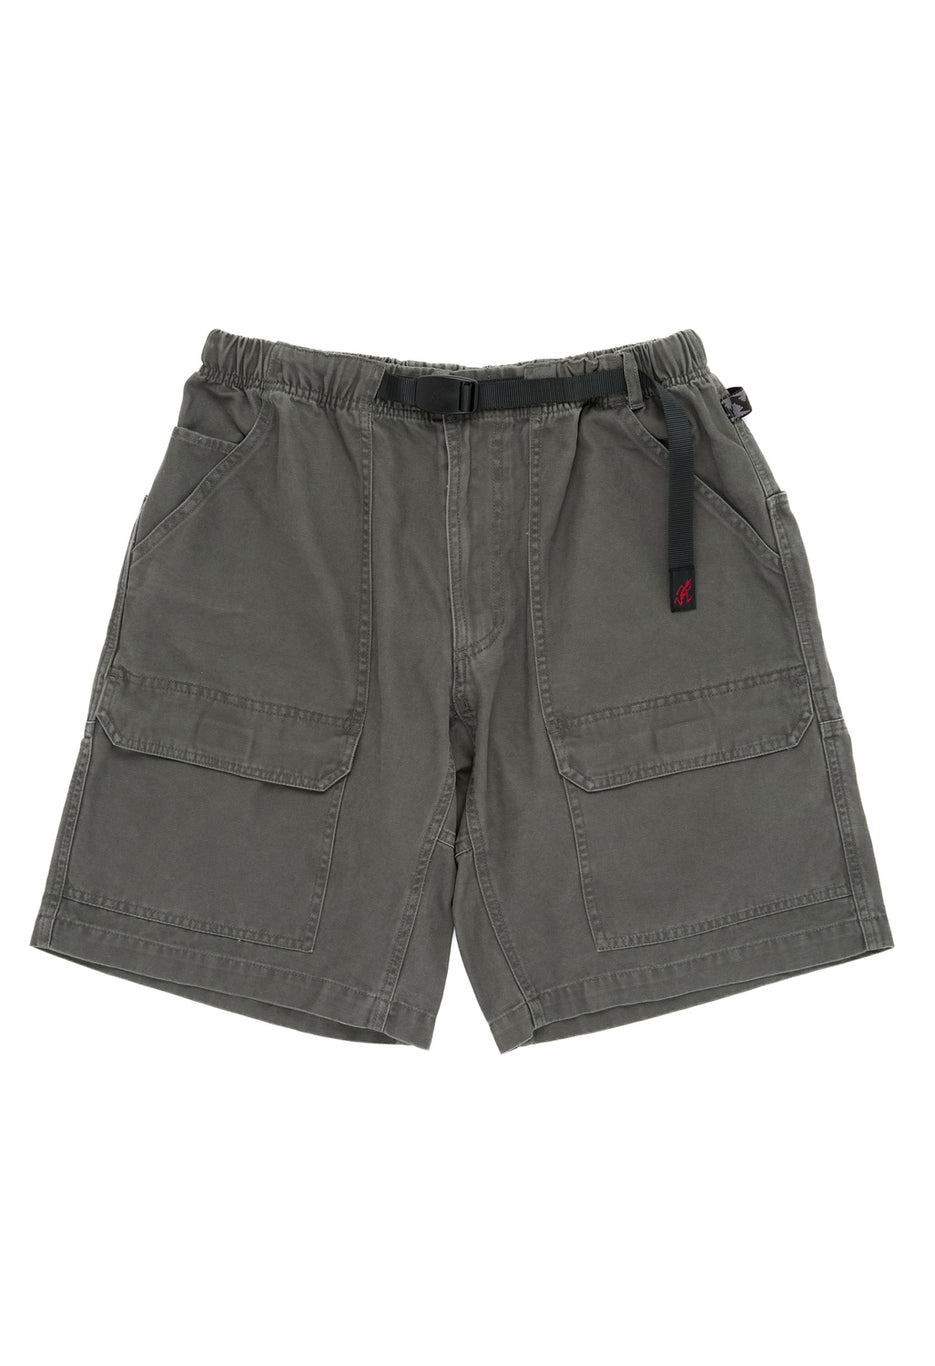 Gramicci Men's Canvas EQT Shorts - Dusted Slate